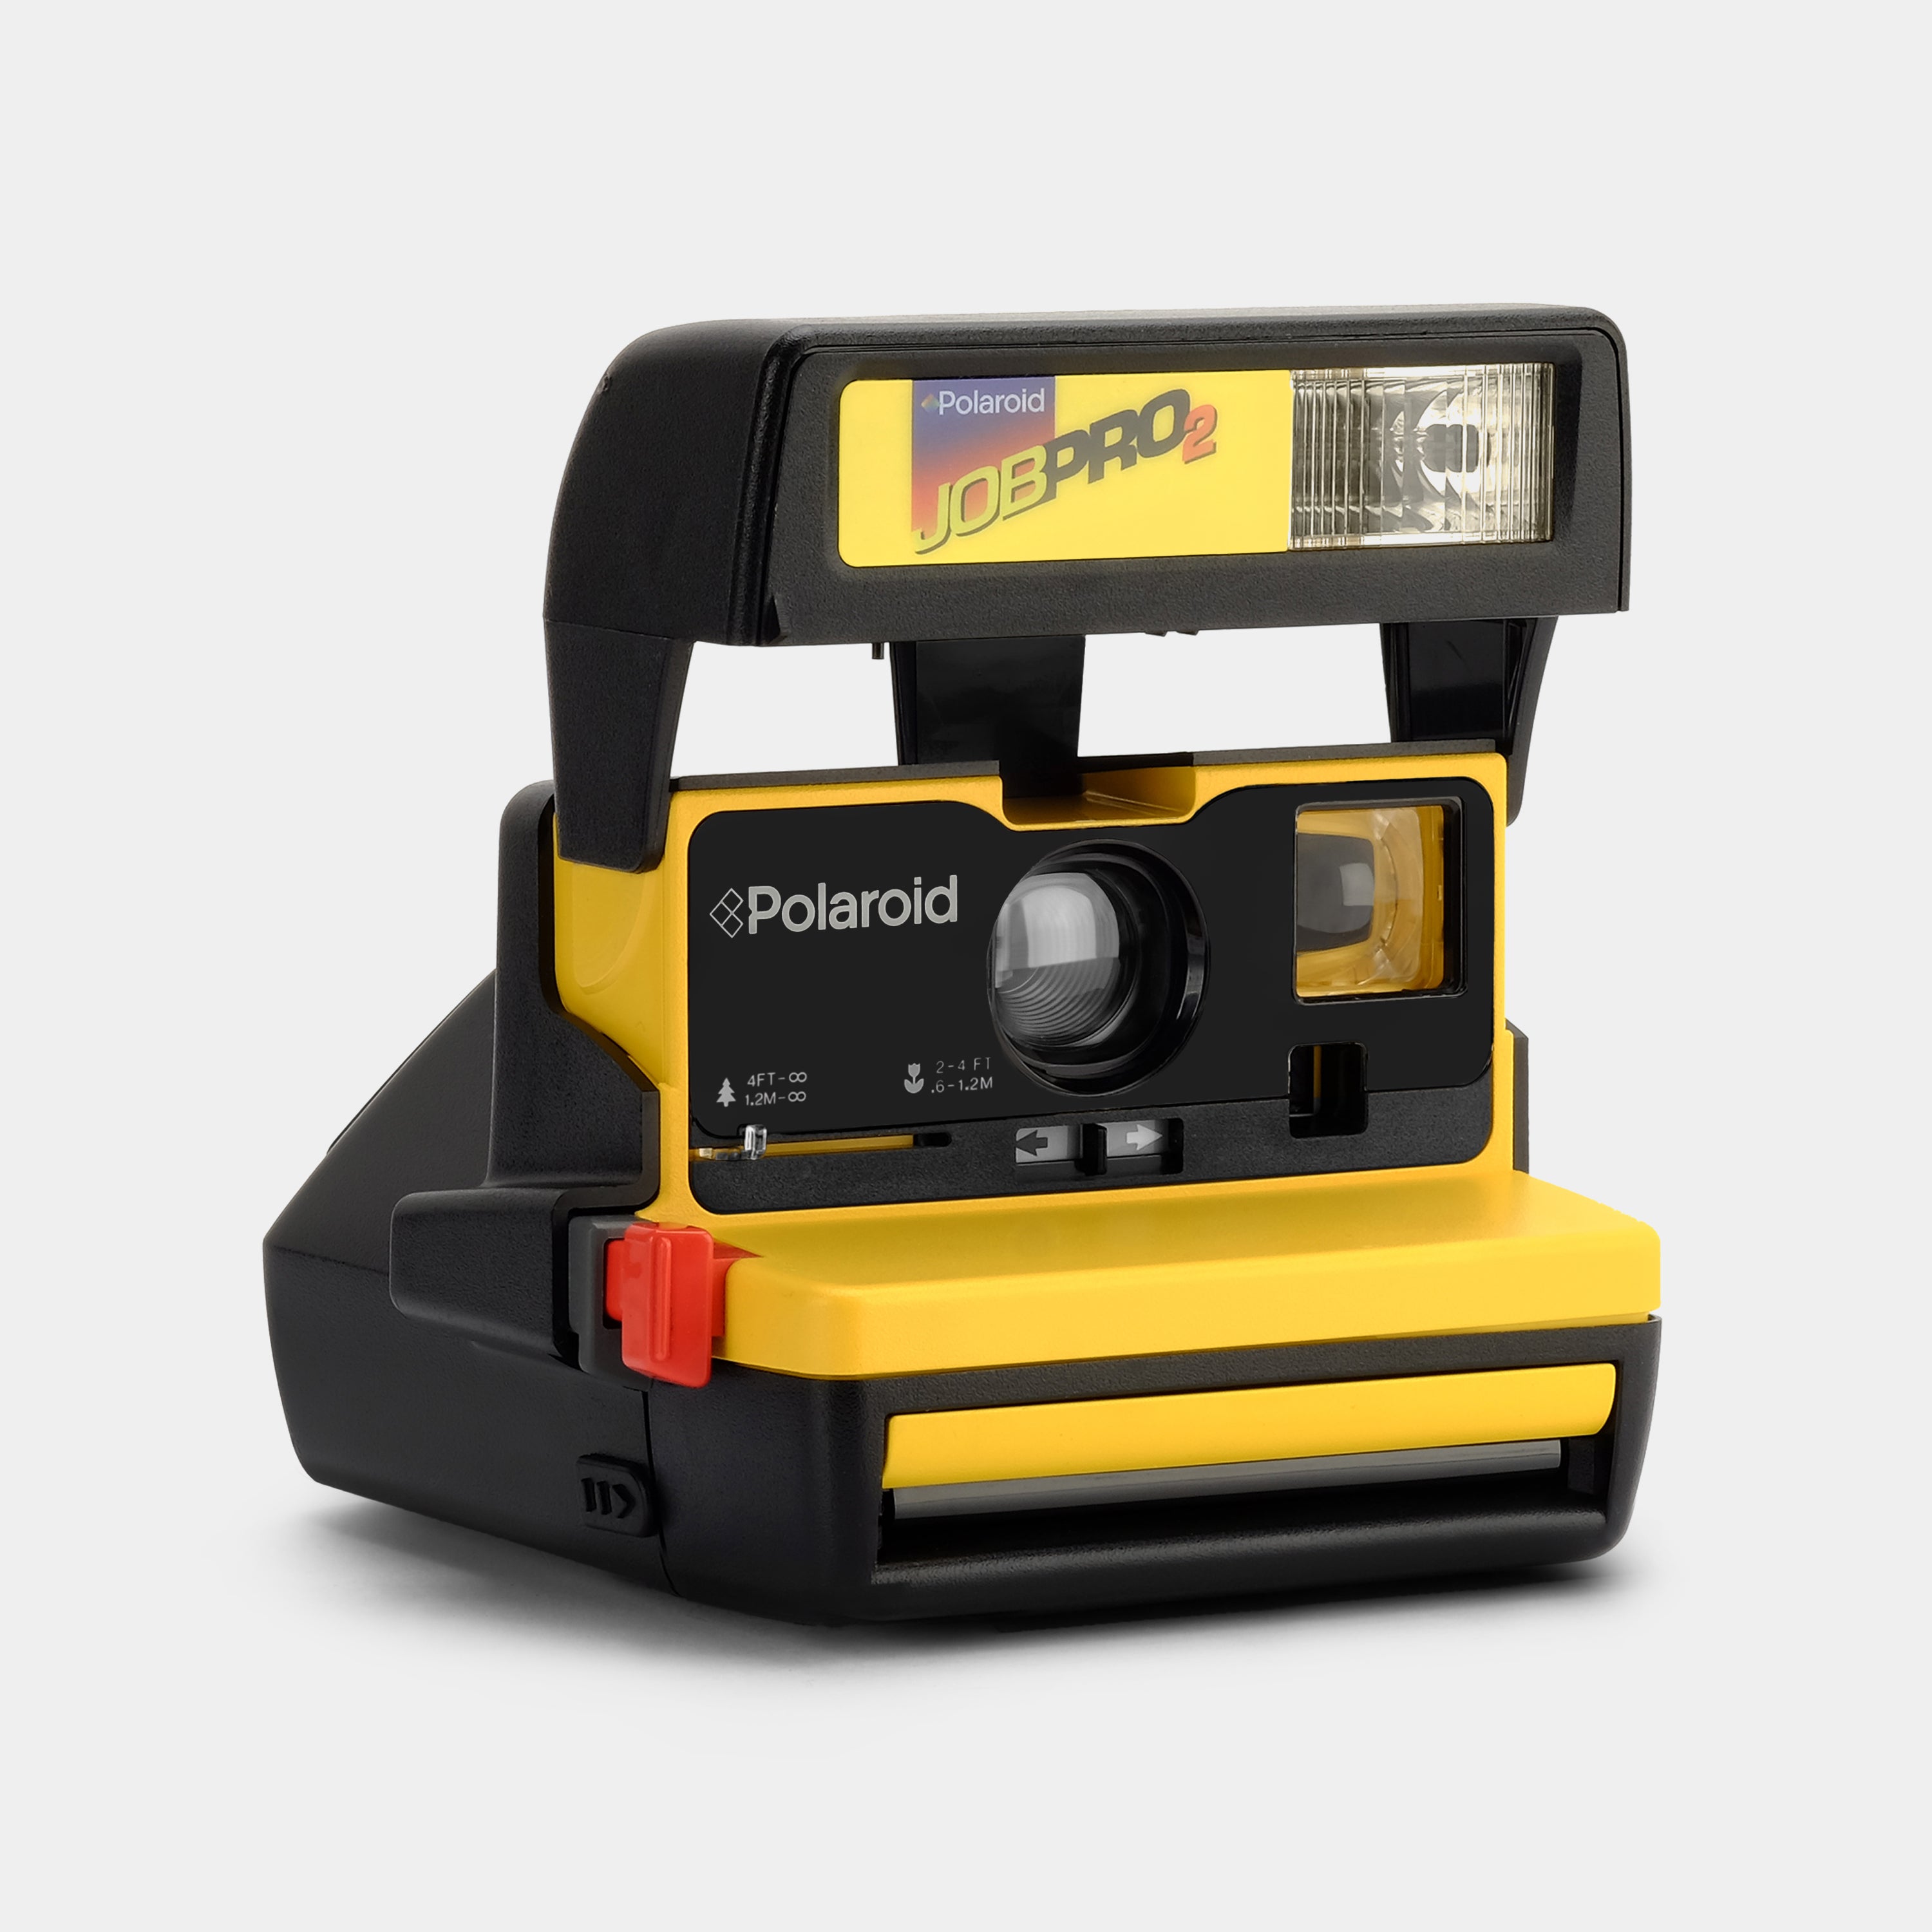 Polaroid 600 Job Pro 2 Instant Film Camera